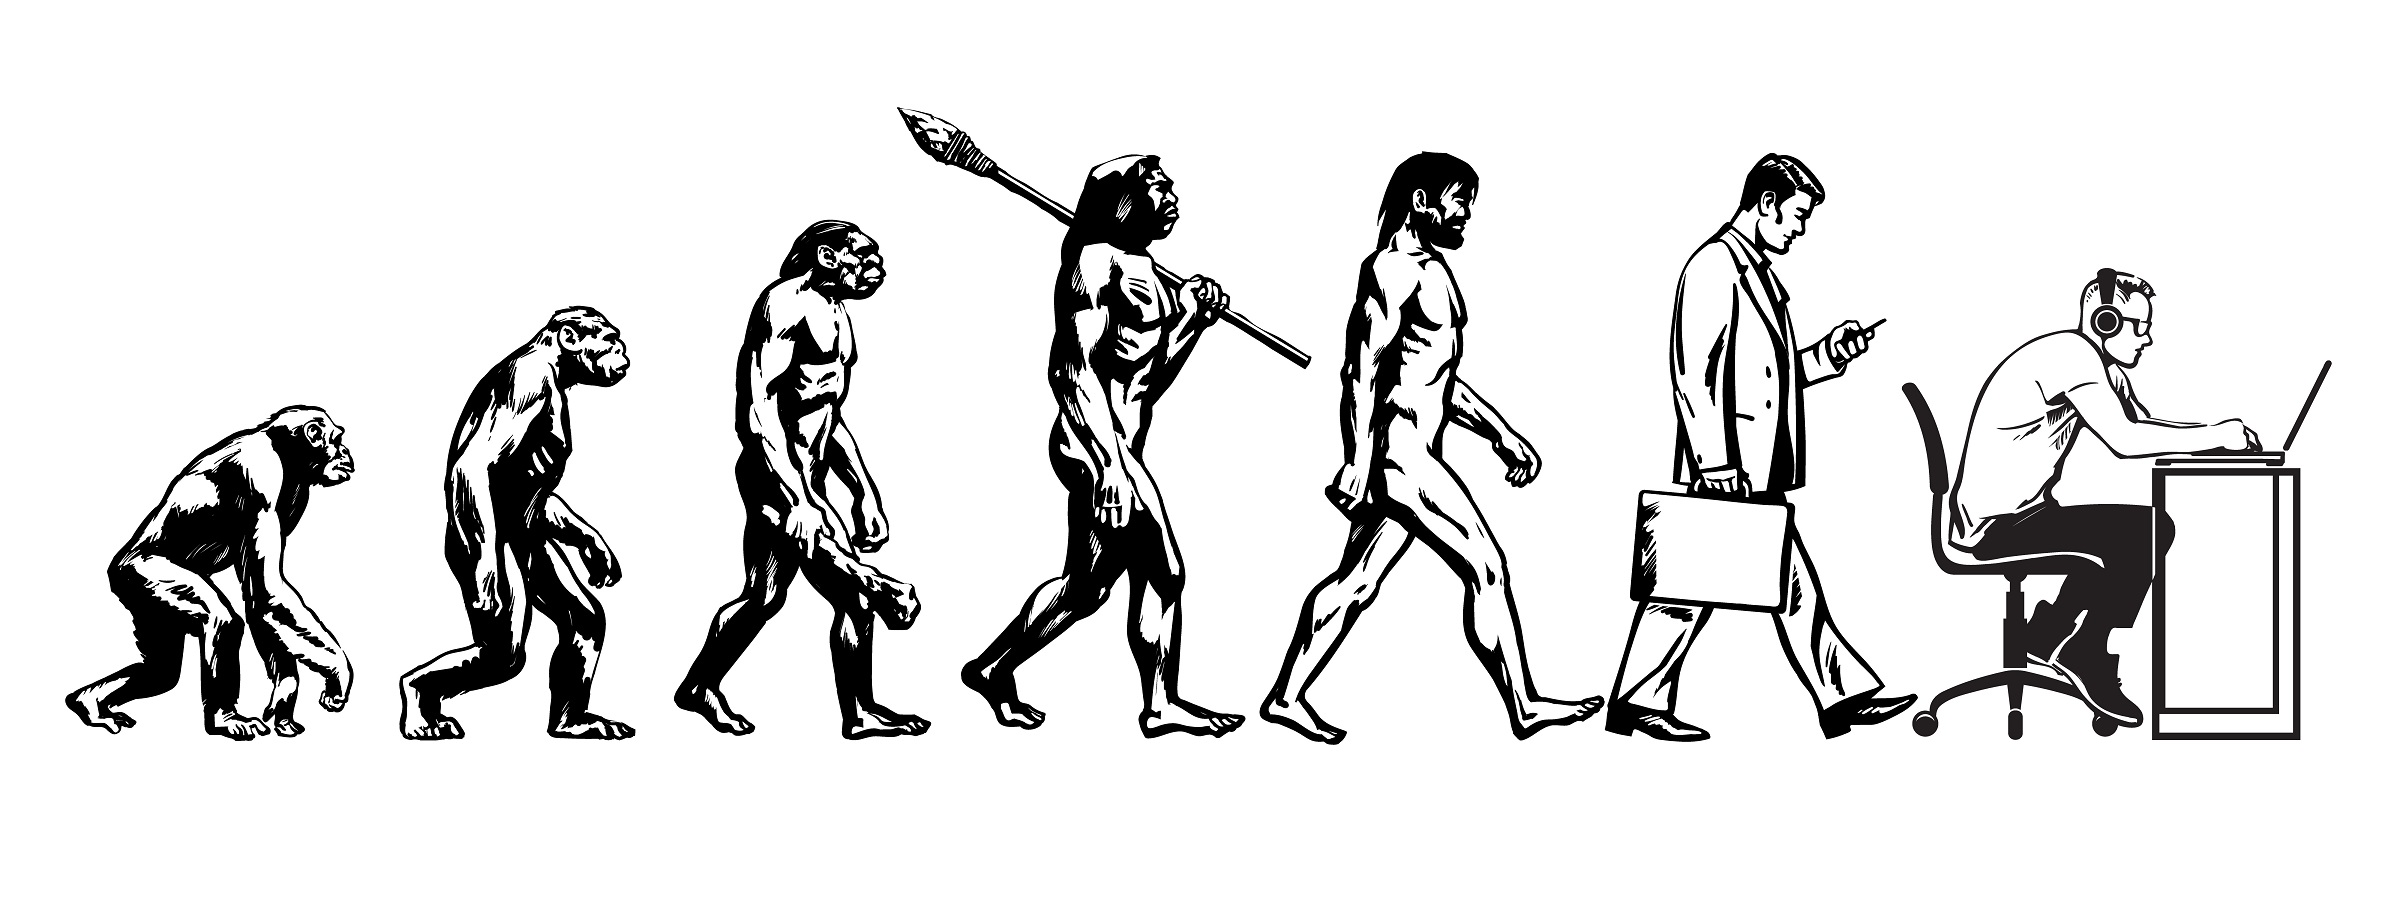 evolution of man- small